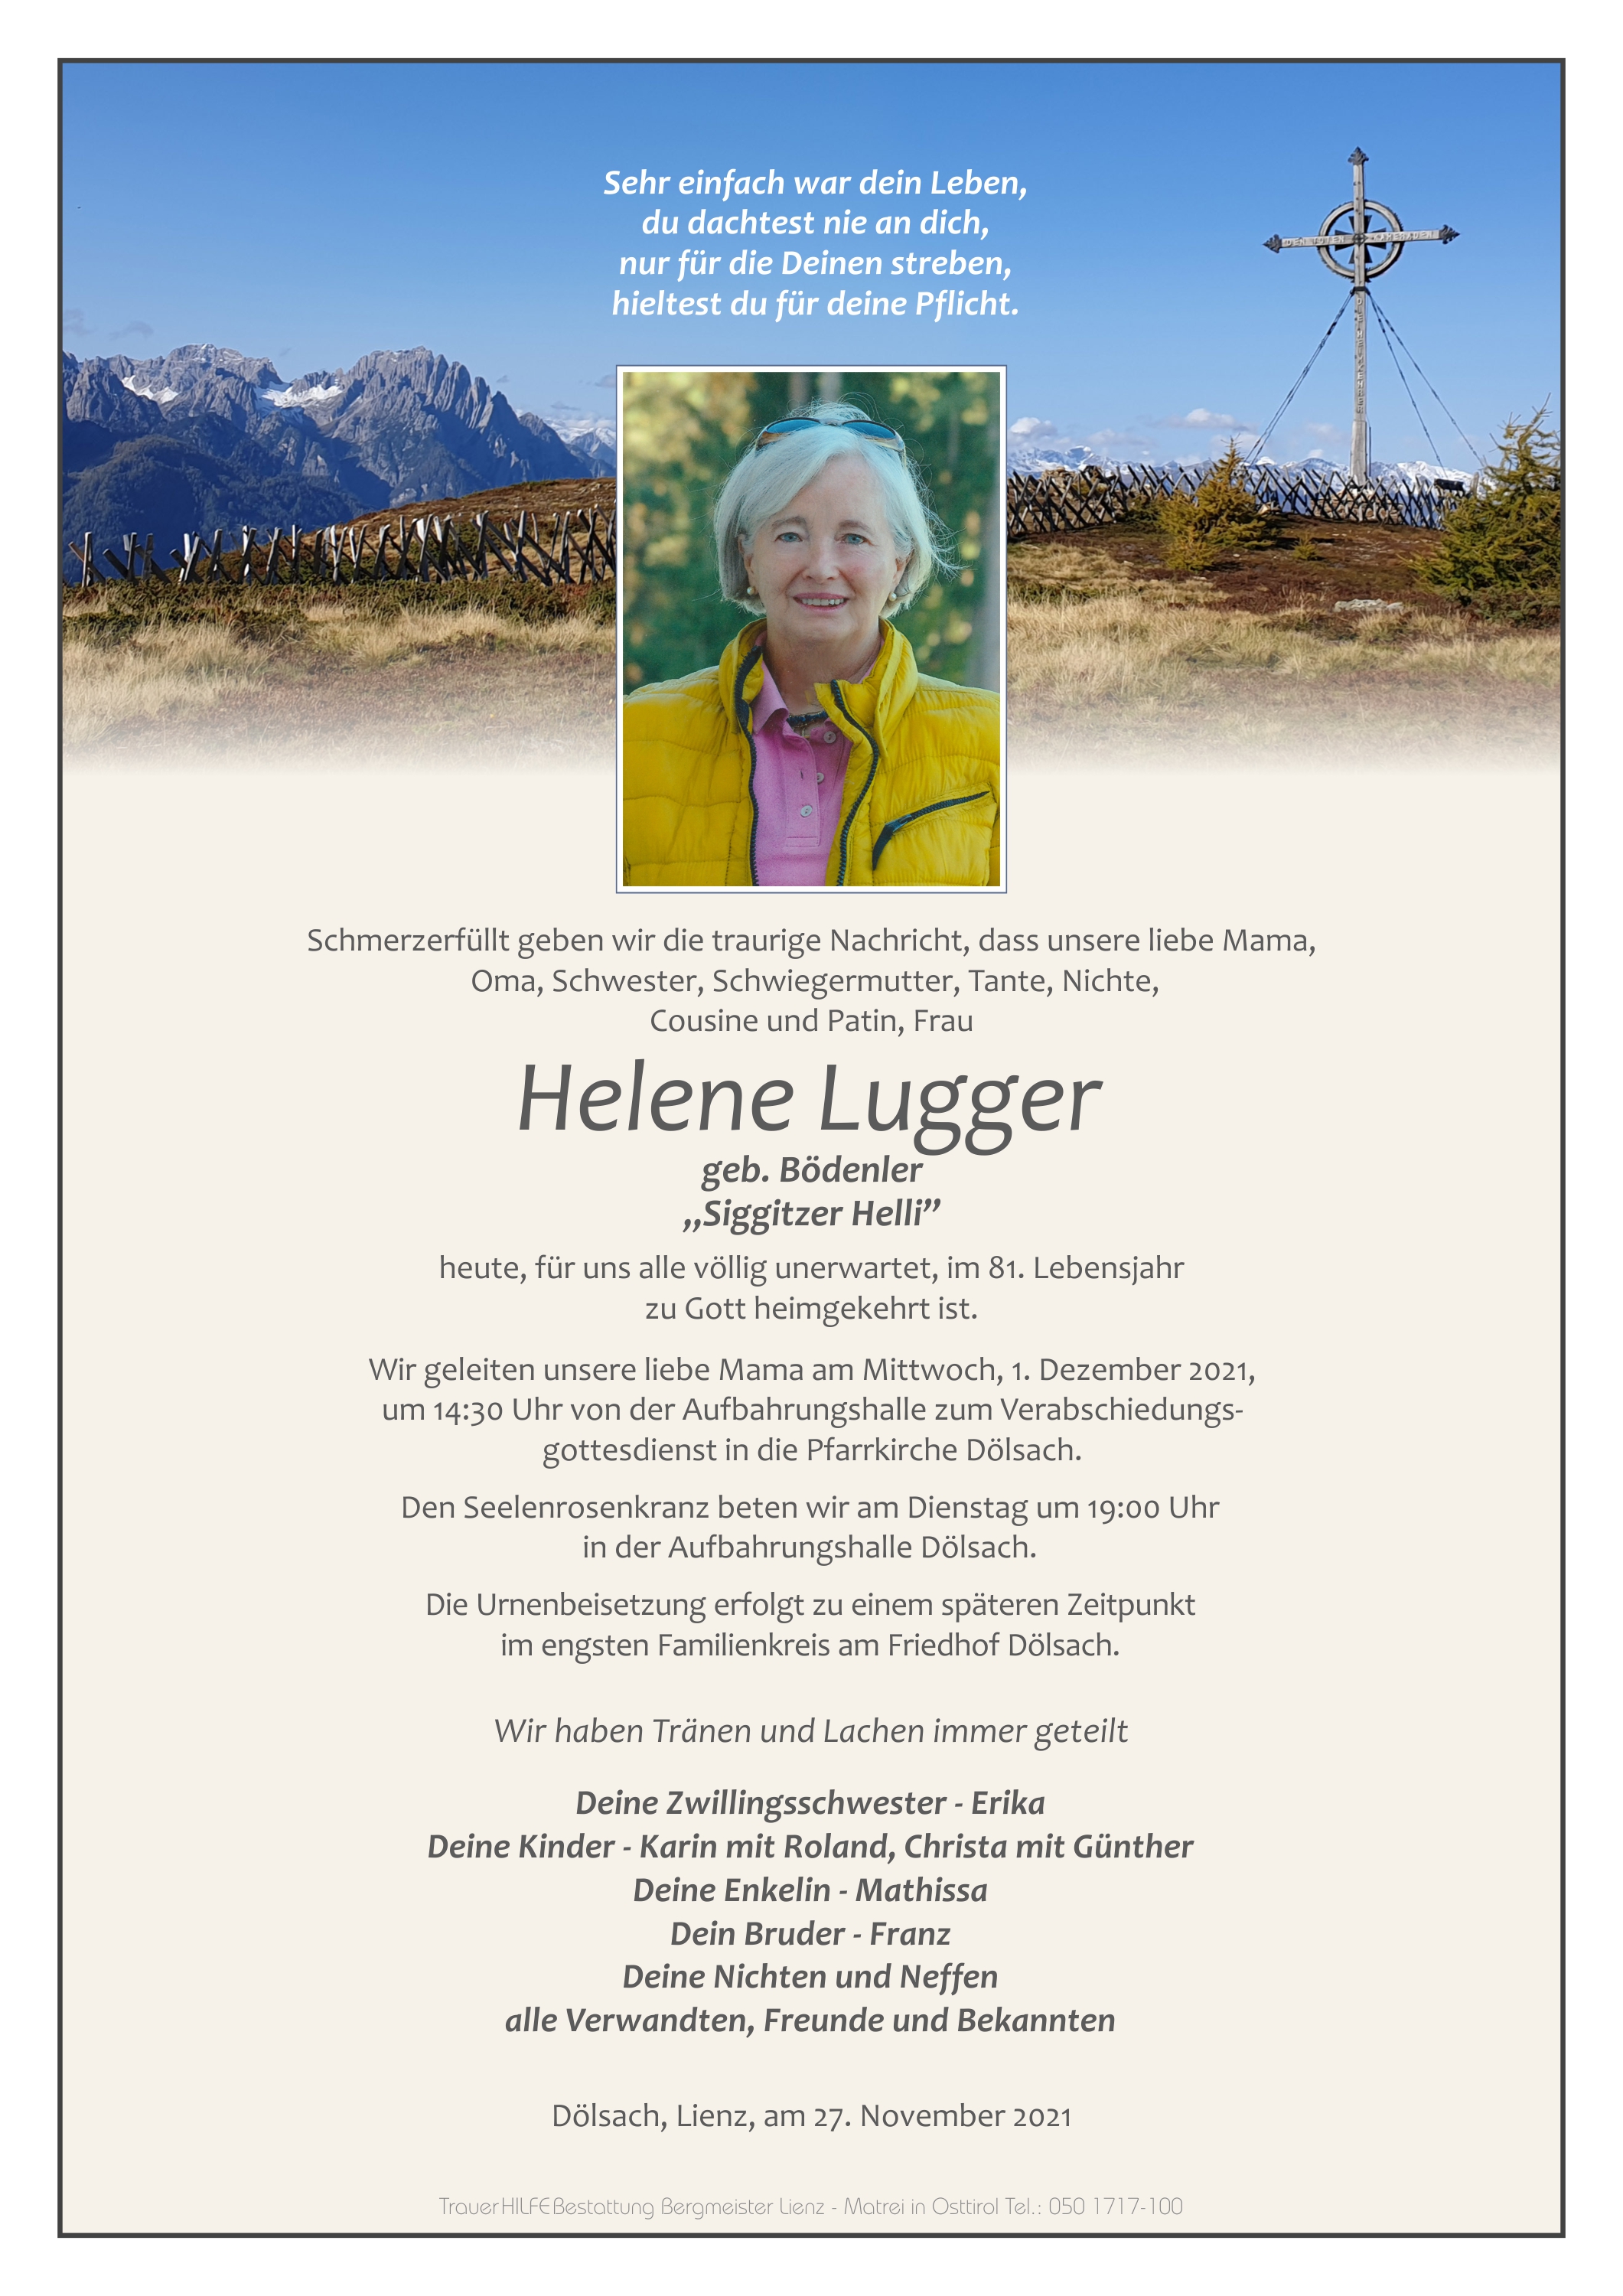 Helene Lugger